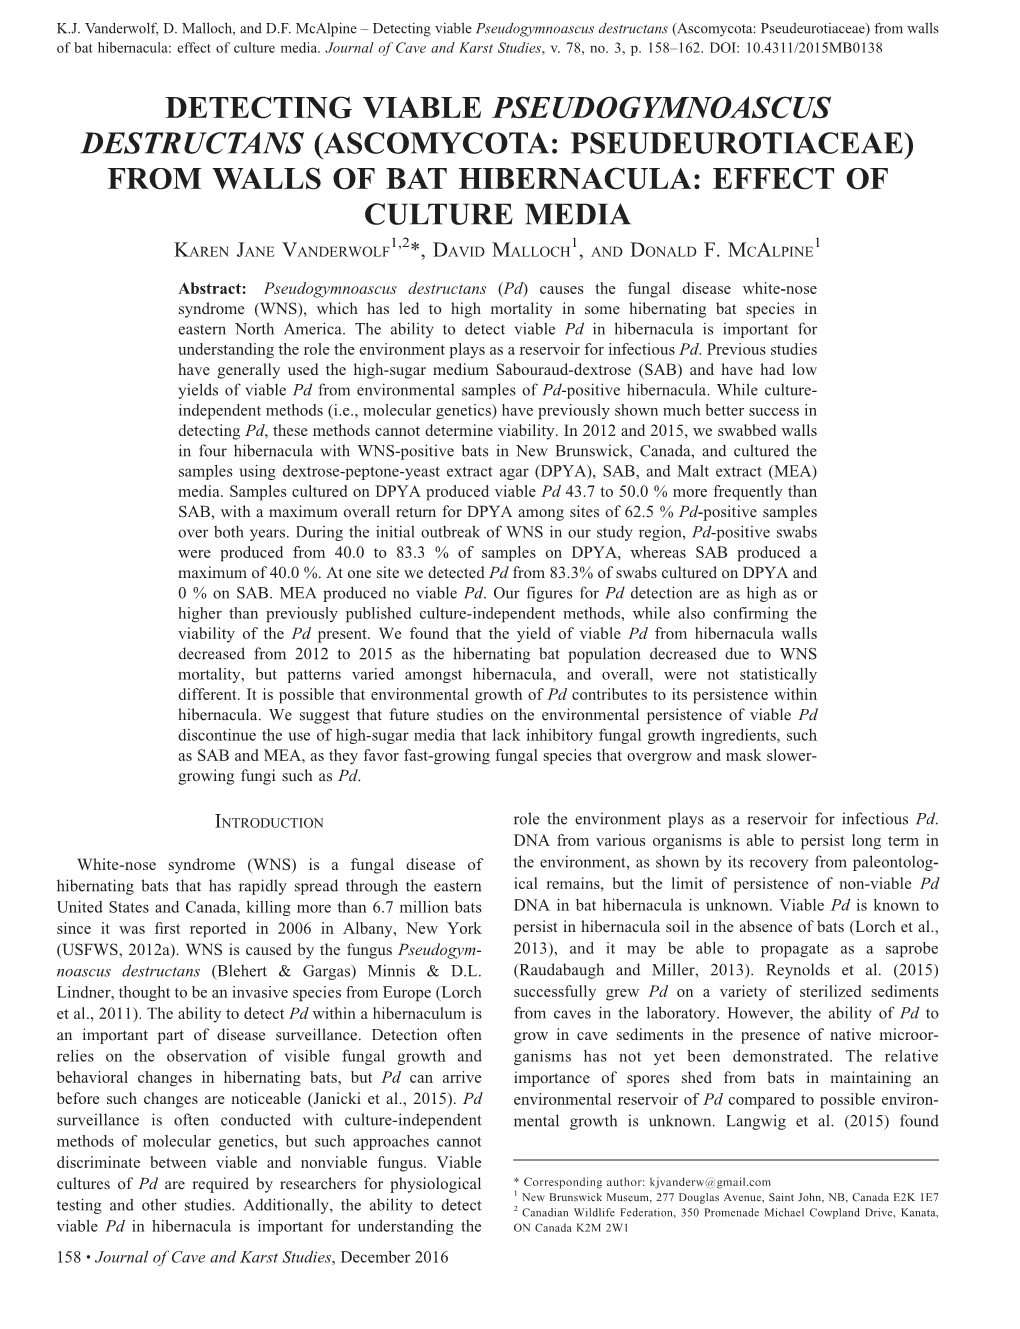 Detecting Viable Pseudogymnoascus Destructans (Ascomycota: Pseudeurotiaceae) from Walls of Bat Hibernacula: Effect of Culture Media